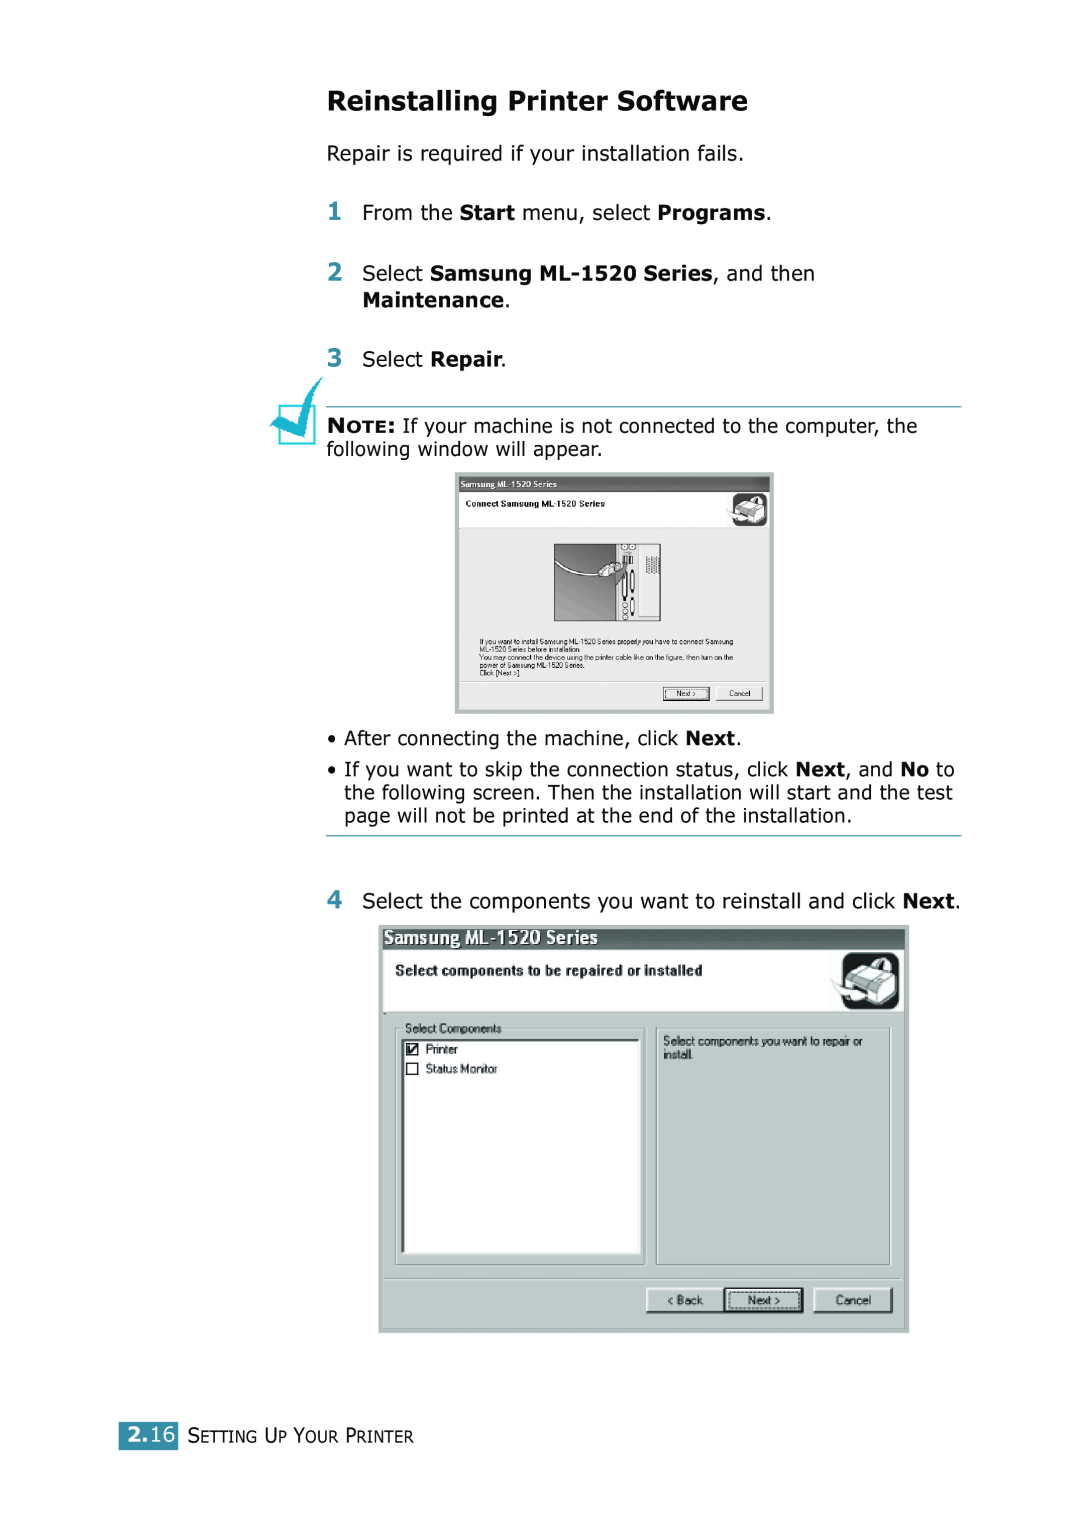 Samsung manual Reinstalling Printer Software, Select Samsung ML-1520 Series, and then Maintenance 